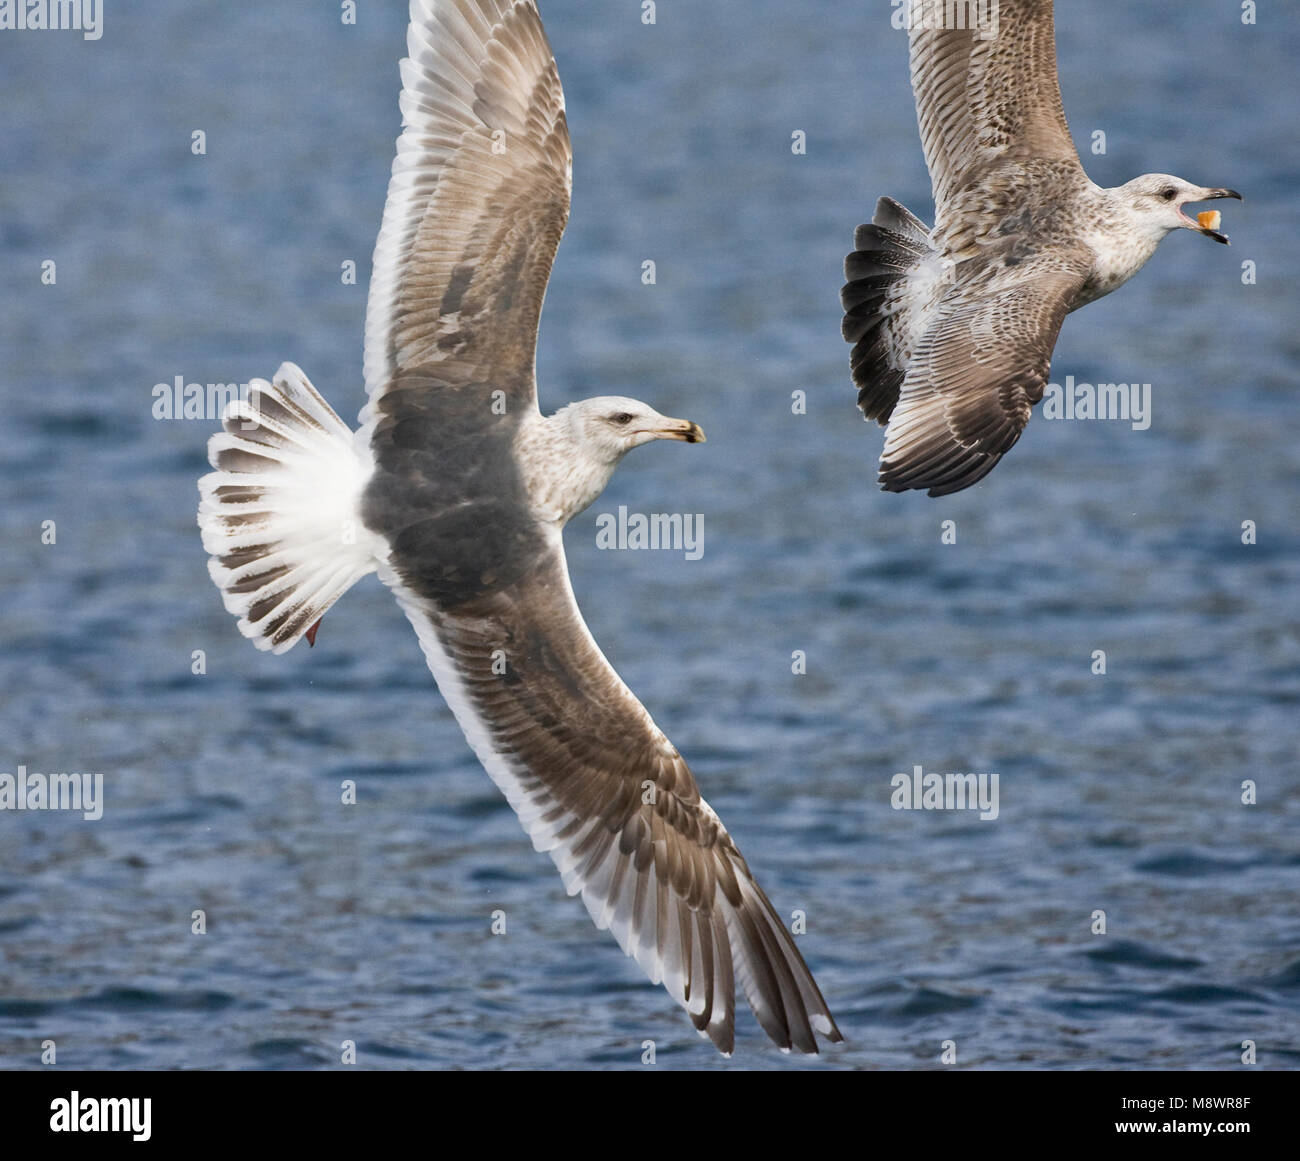 Kamtsjatkameeuw onvolwassen meeuw achtervolgend; Slaty-backed Gull immature chasing gull Stock Photo